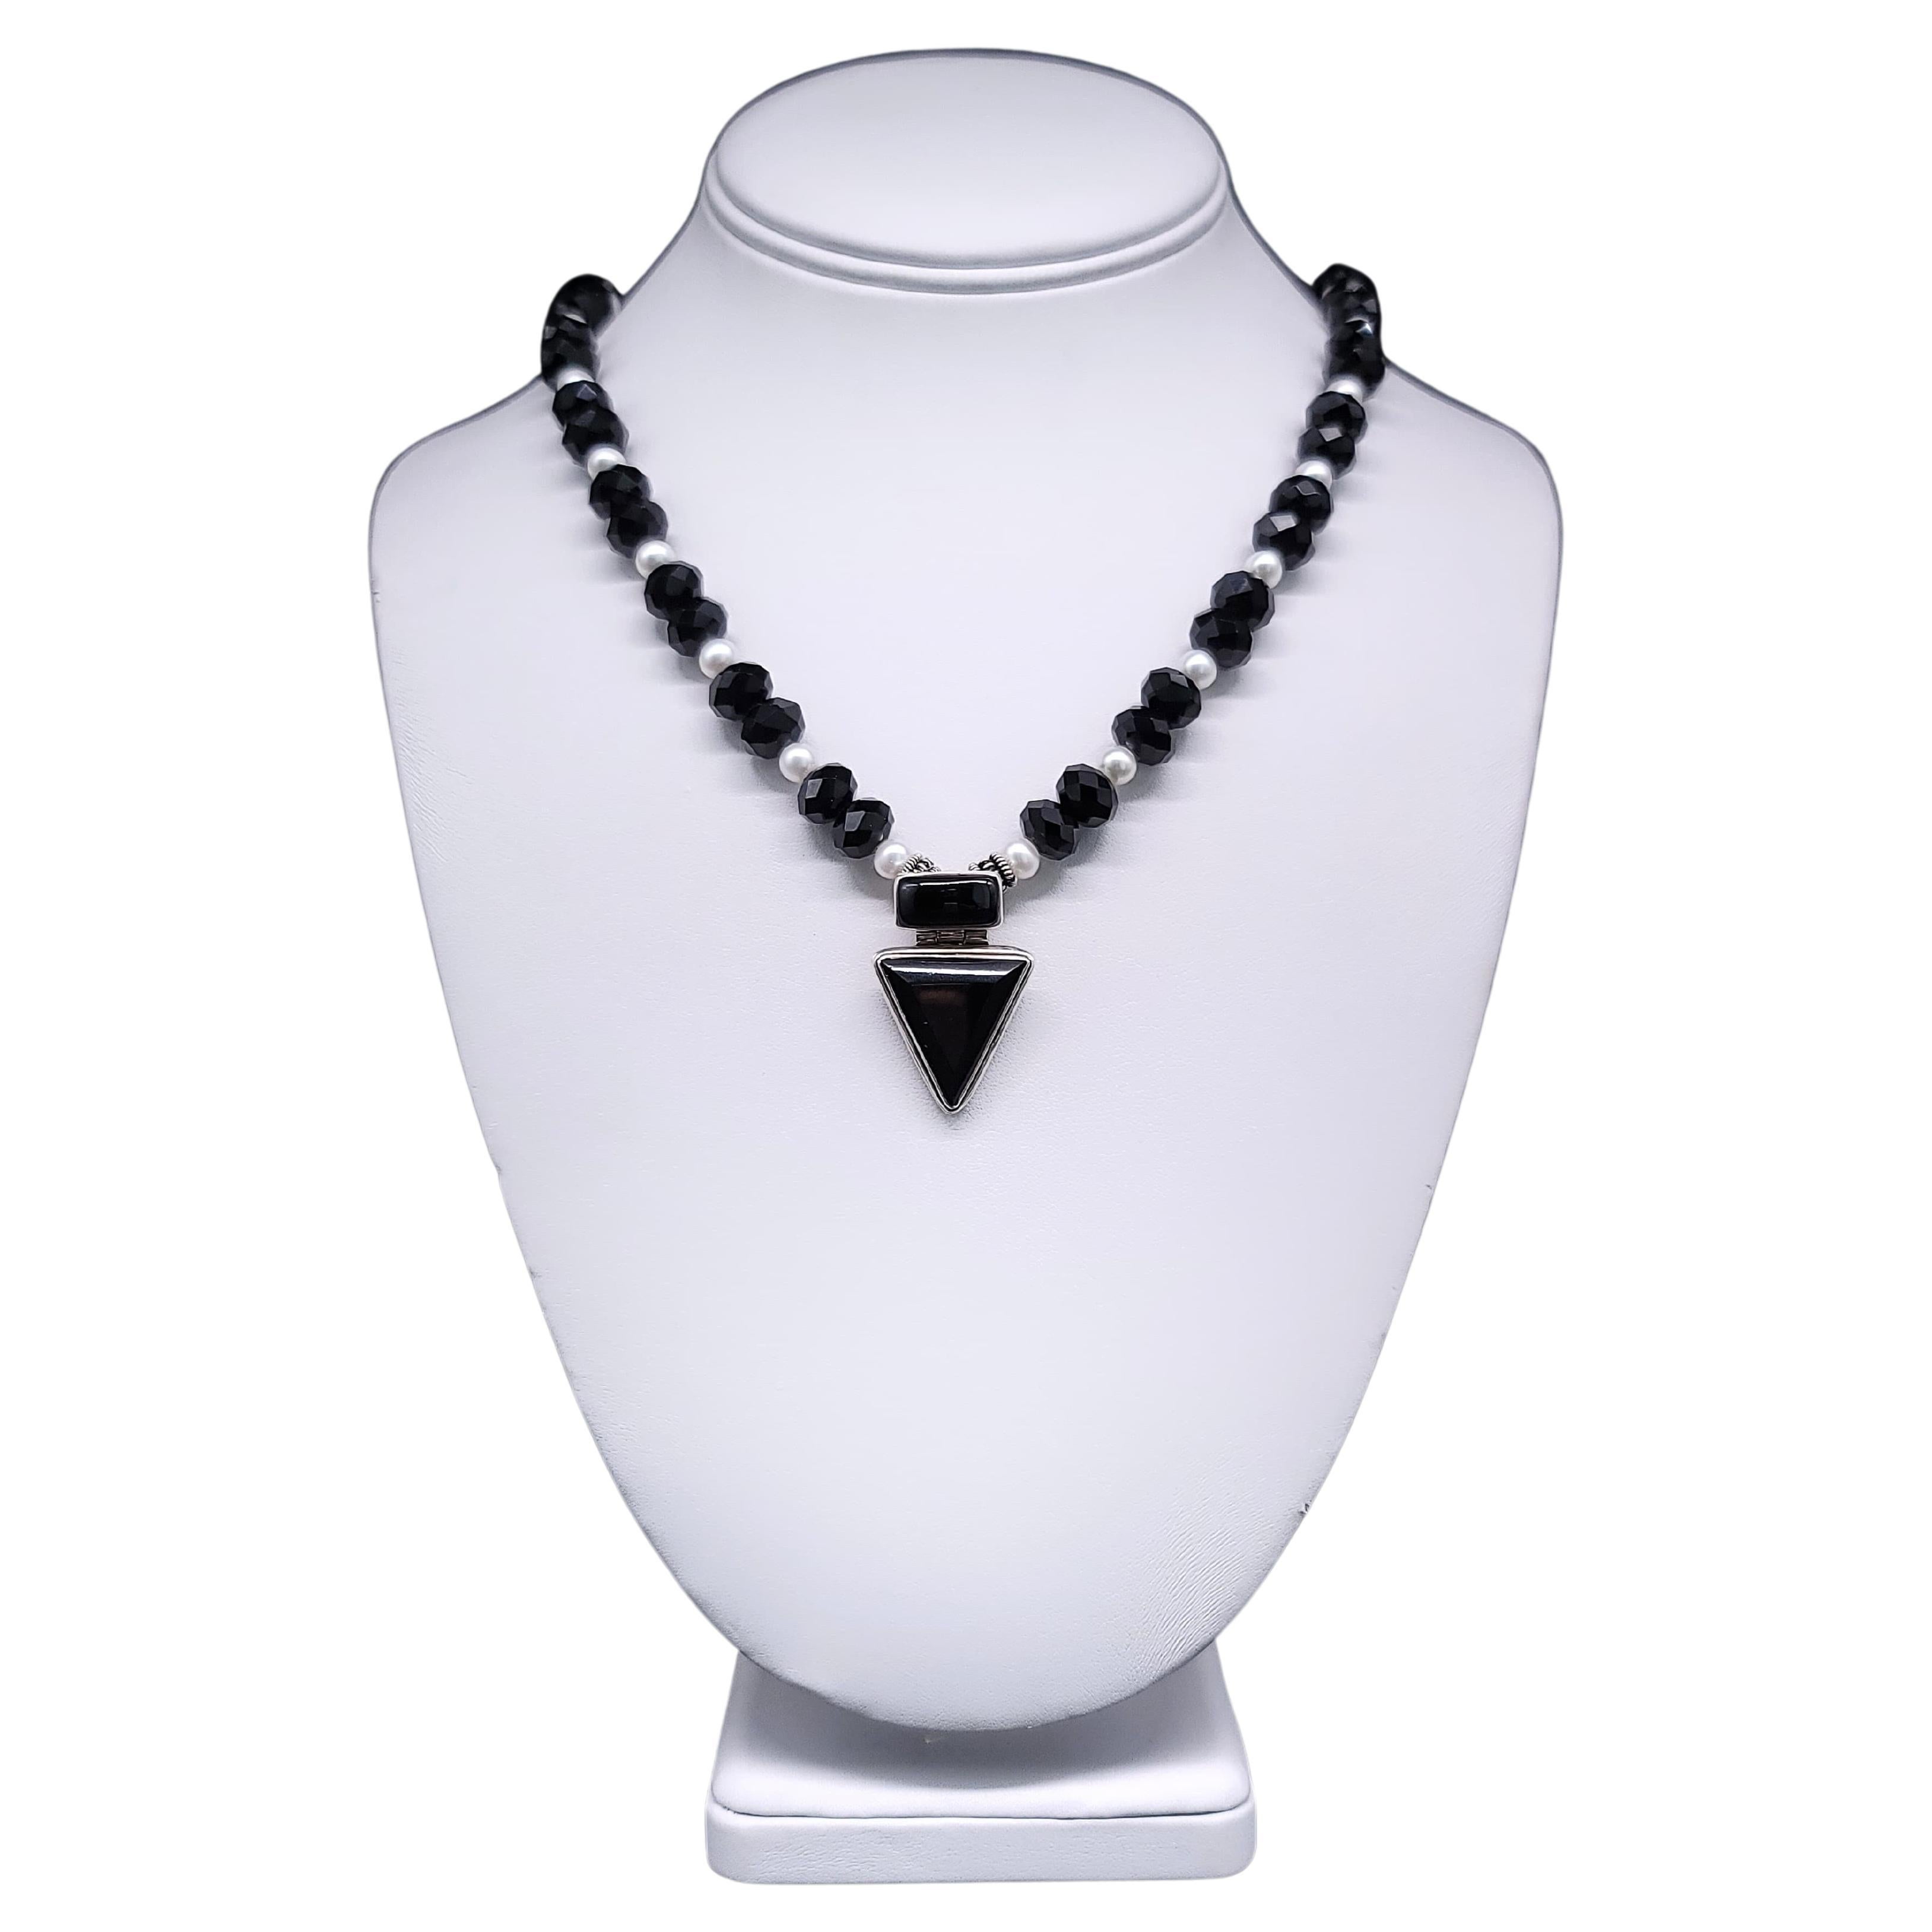 A.Jeschel Versatile and elegant Onyx pendant necklace.